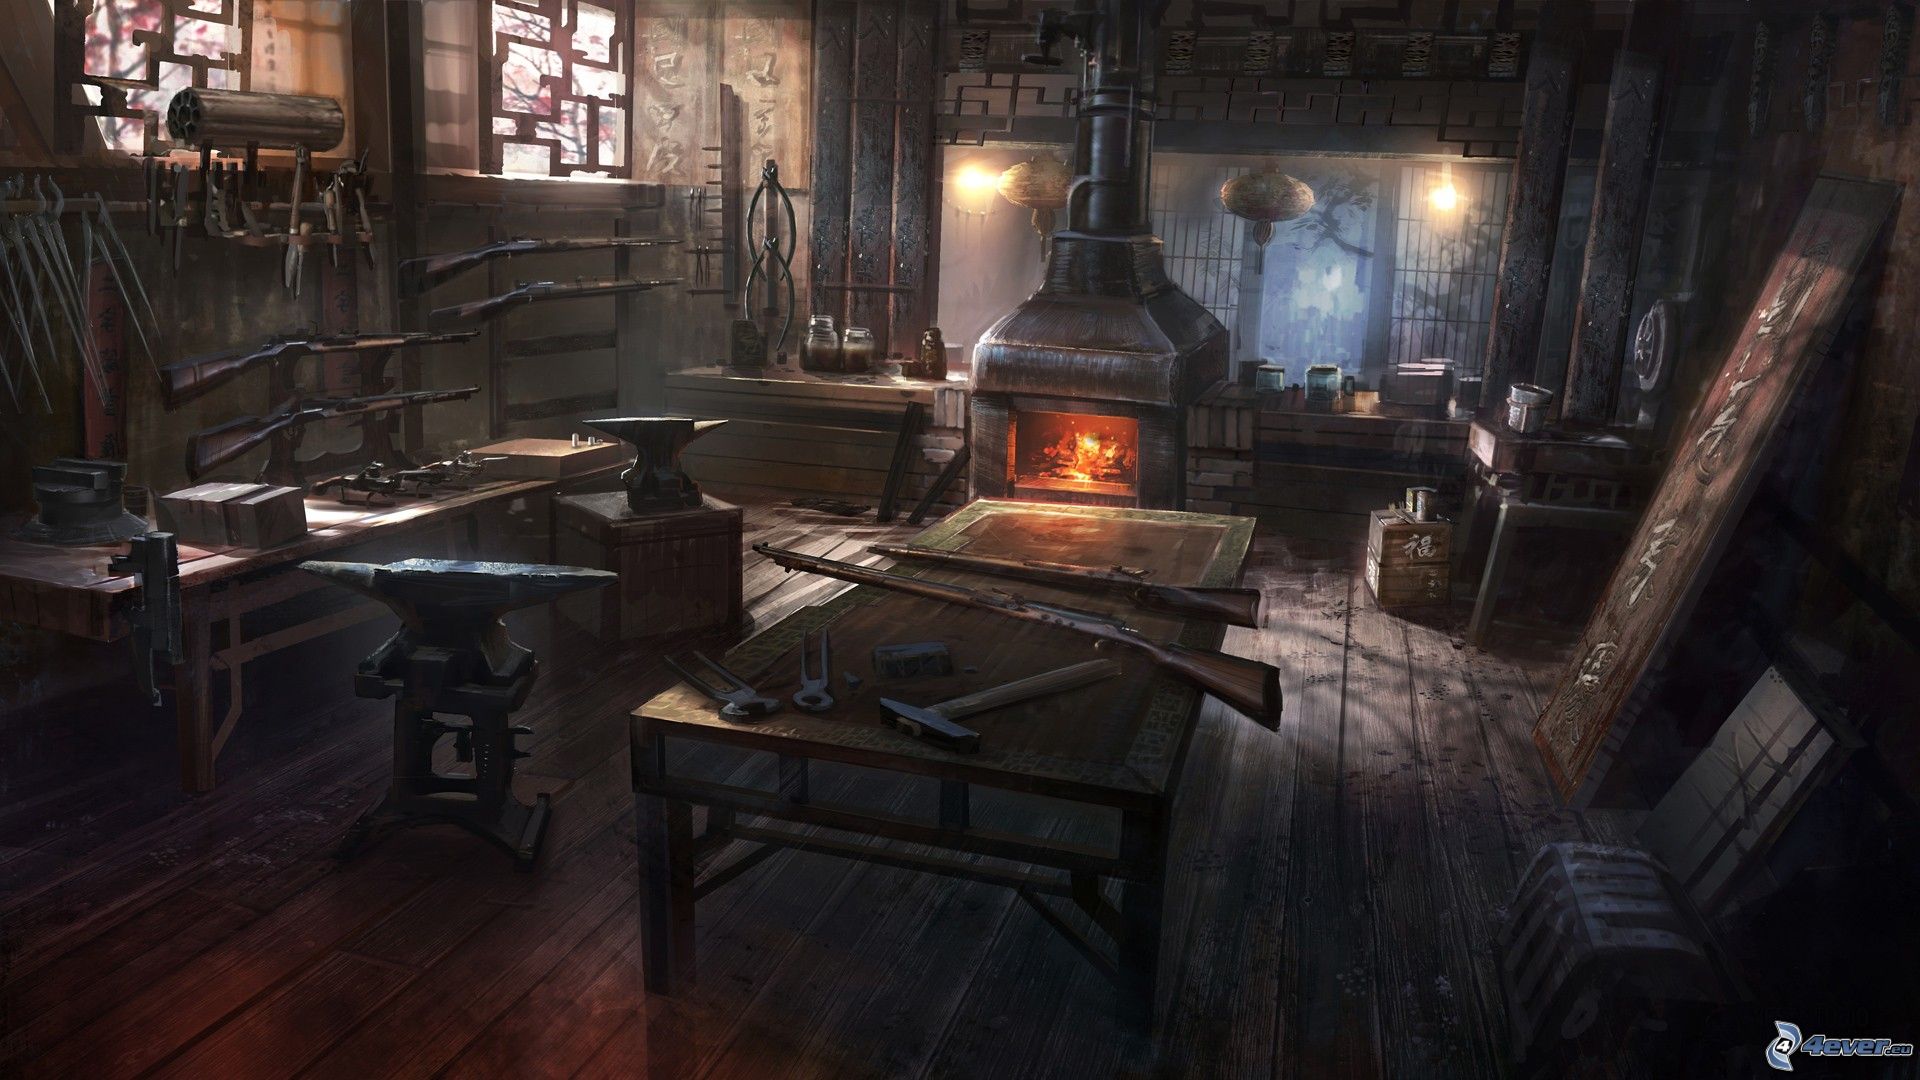 workshop,-table,-tools,-fireplace-186535.jpg